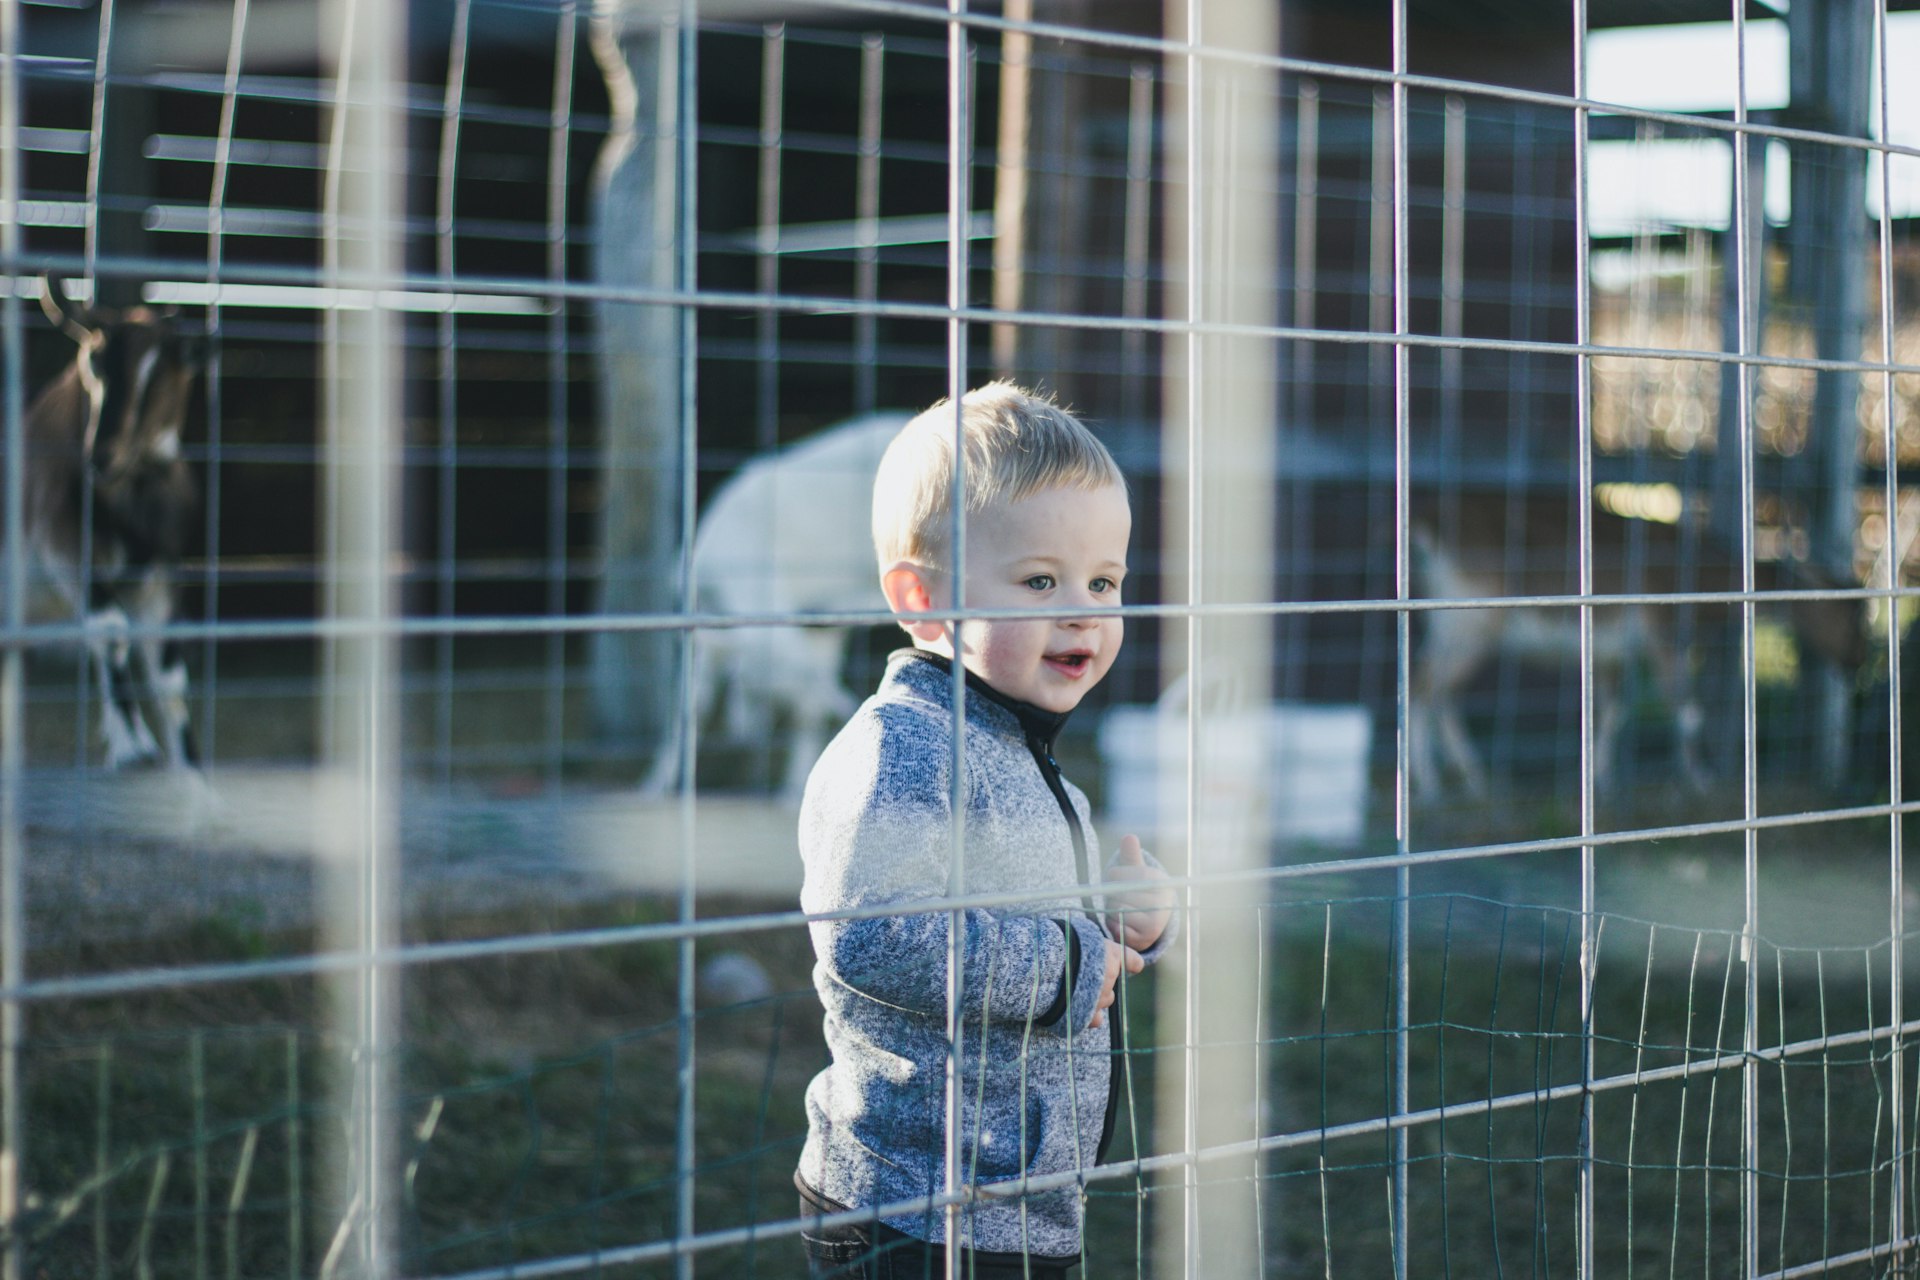 child in blue denim jacket standing near black metal fence during daytime